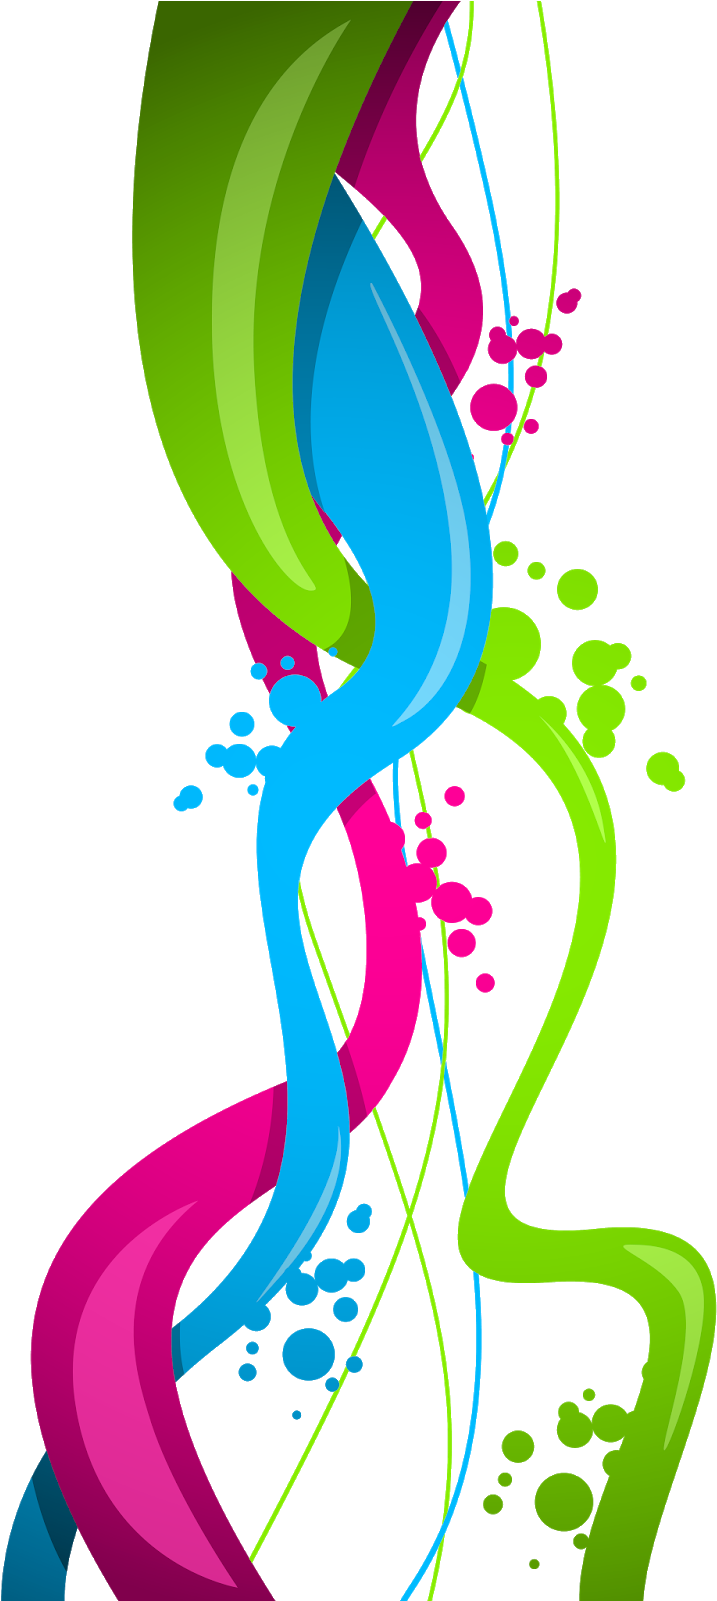 Colorful Diseño gráfico abstracto PNG transparente Image